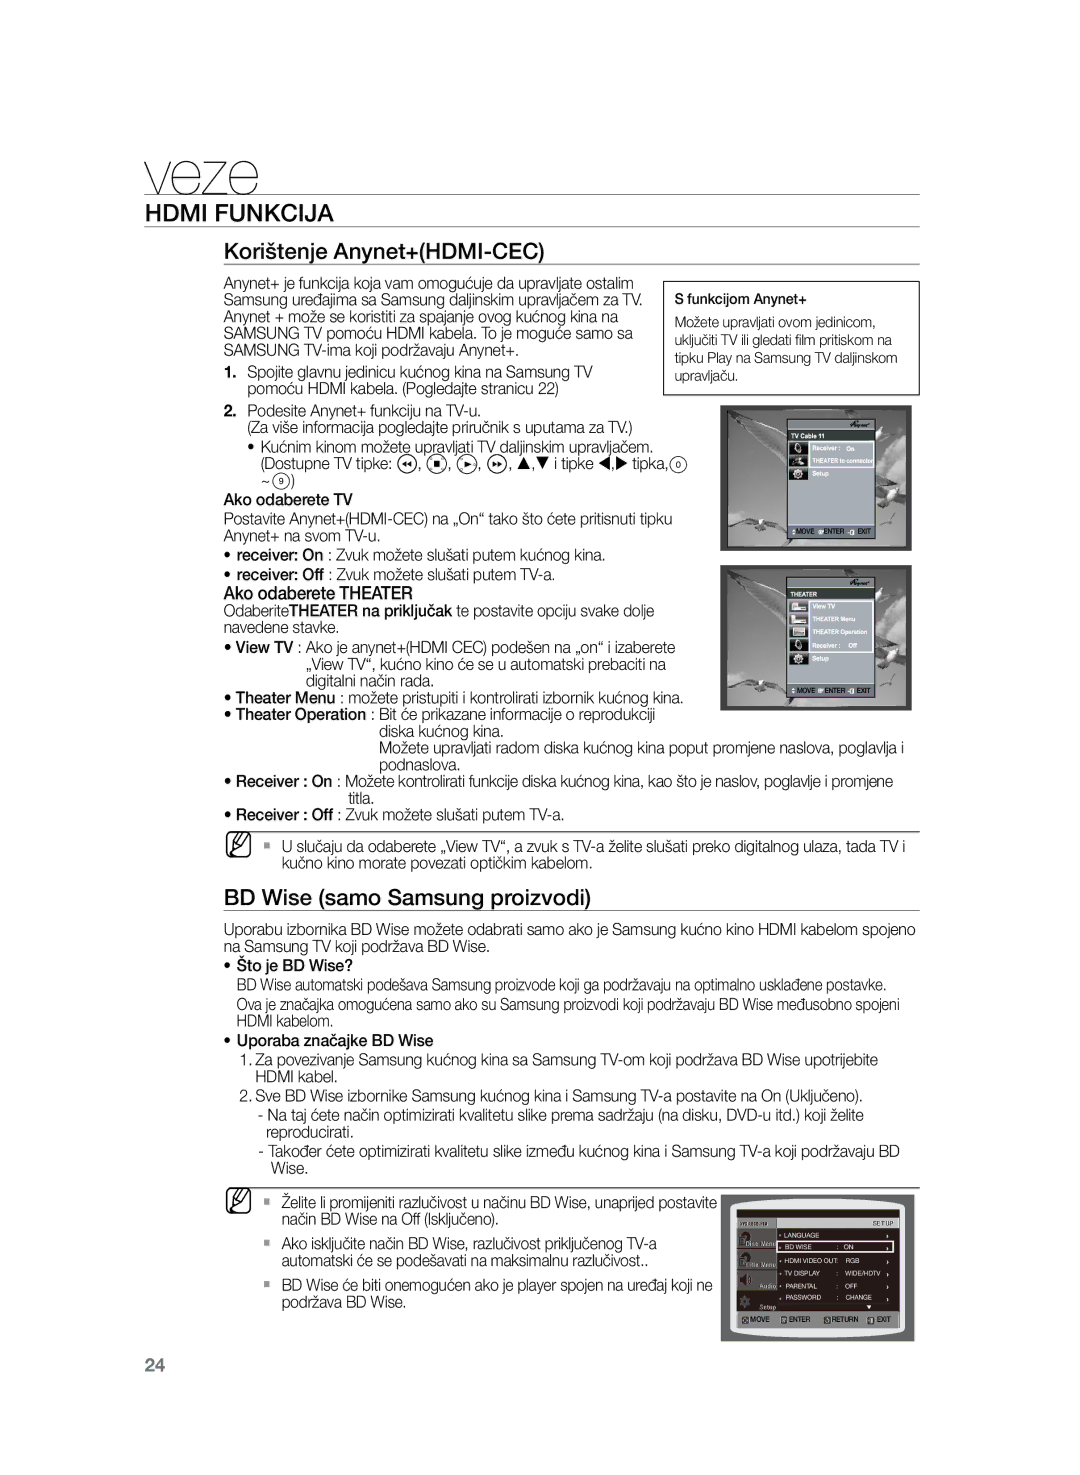 Samsung HT-Z220R/XEE, HT-TZ222R/EDC manual Korištenje Anynet+HDMI-CEC, BD Wise samo Samsung proizvodi, Ako odaberete Theater 